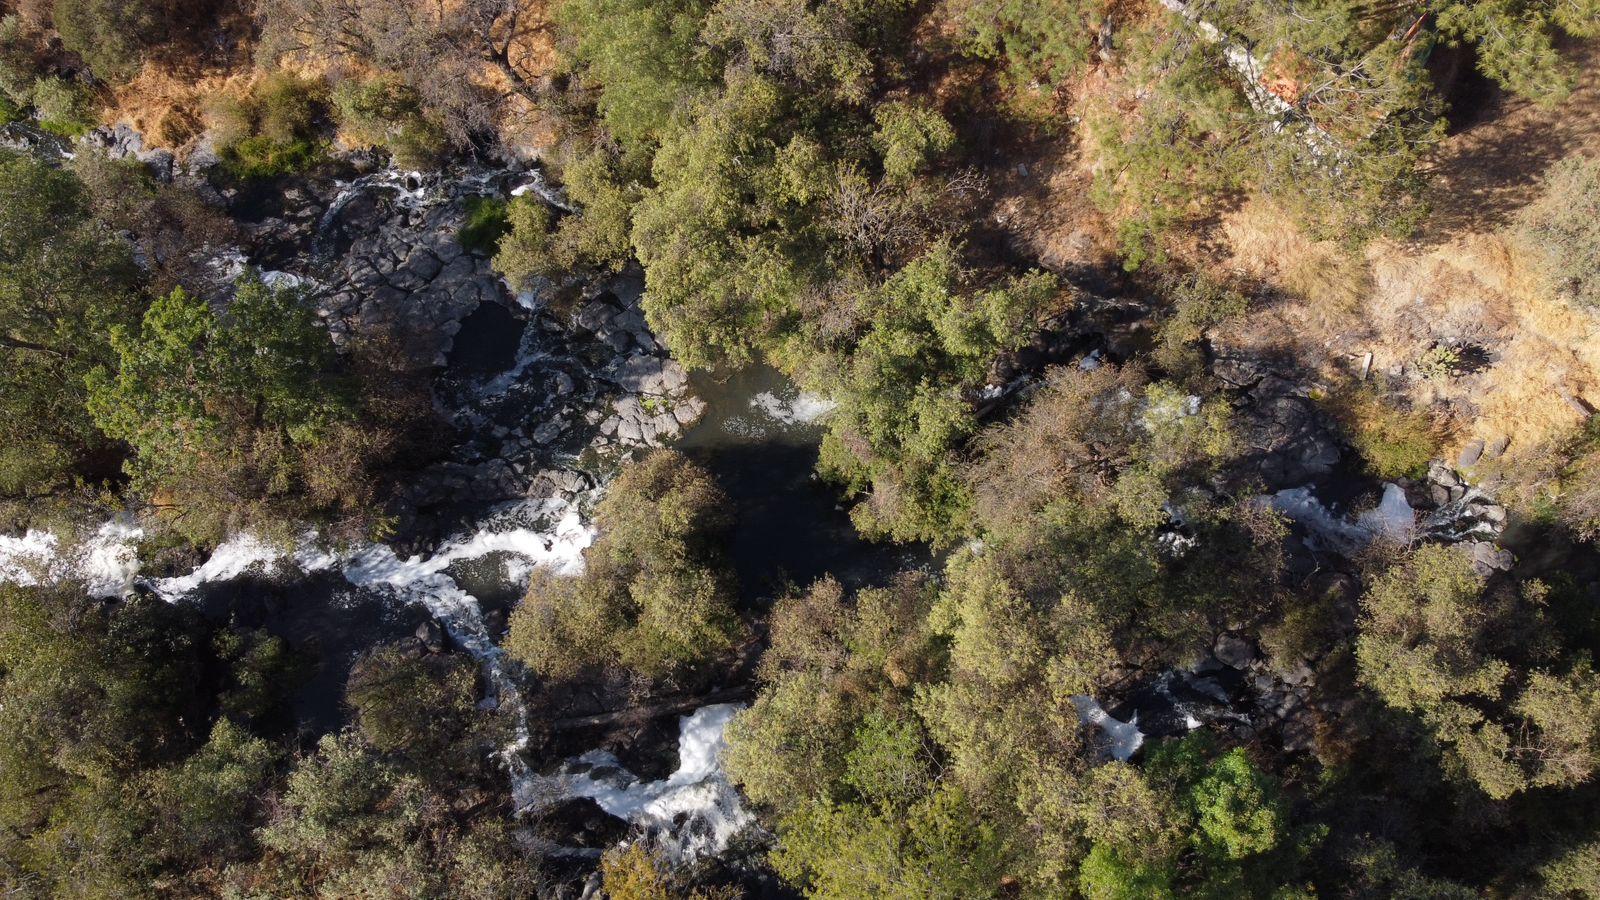 Vista aérea de la cascada de Atlihuetzía